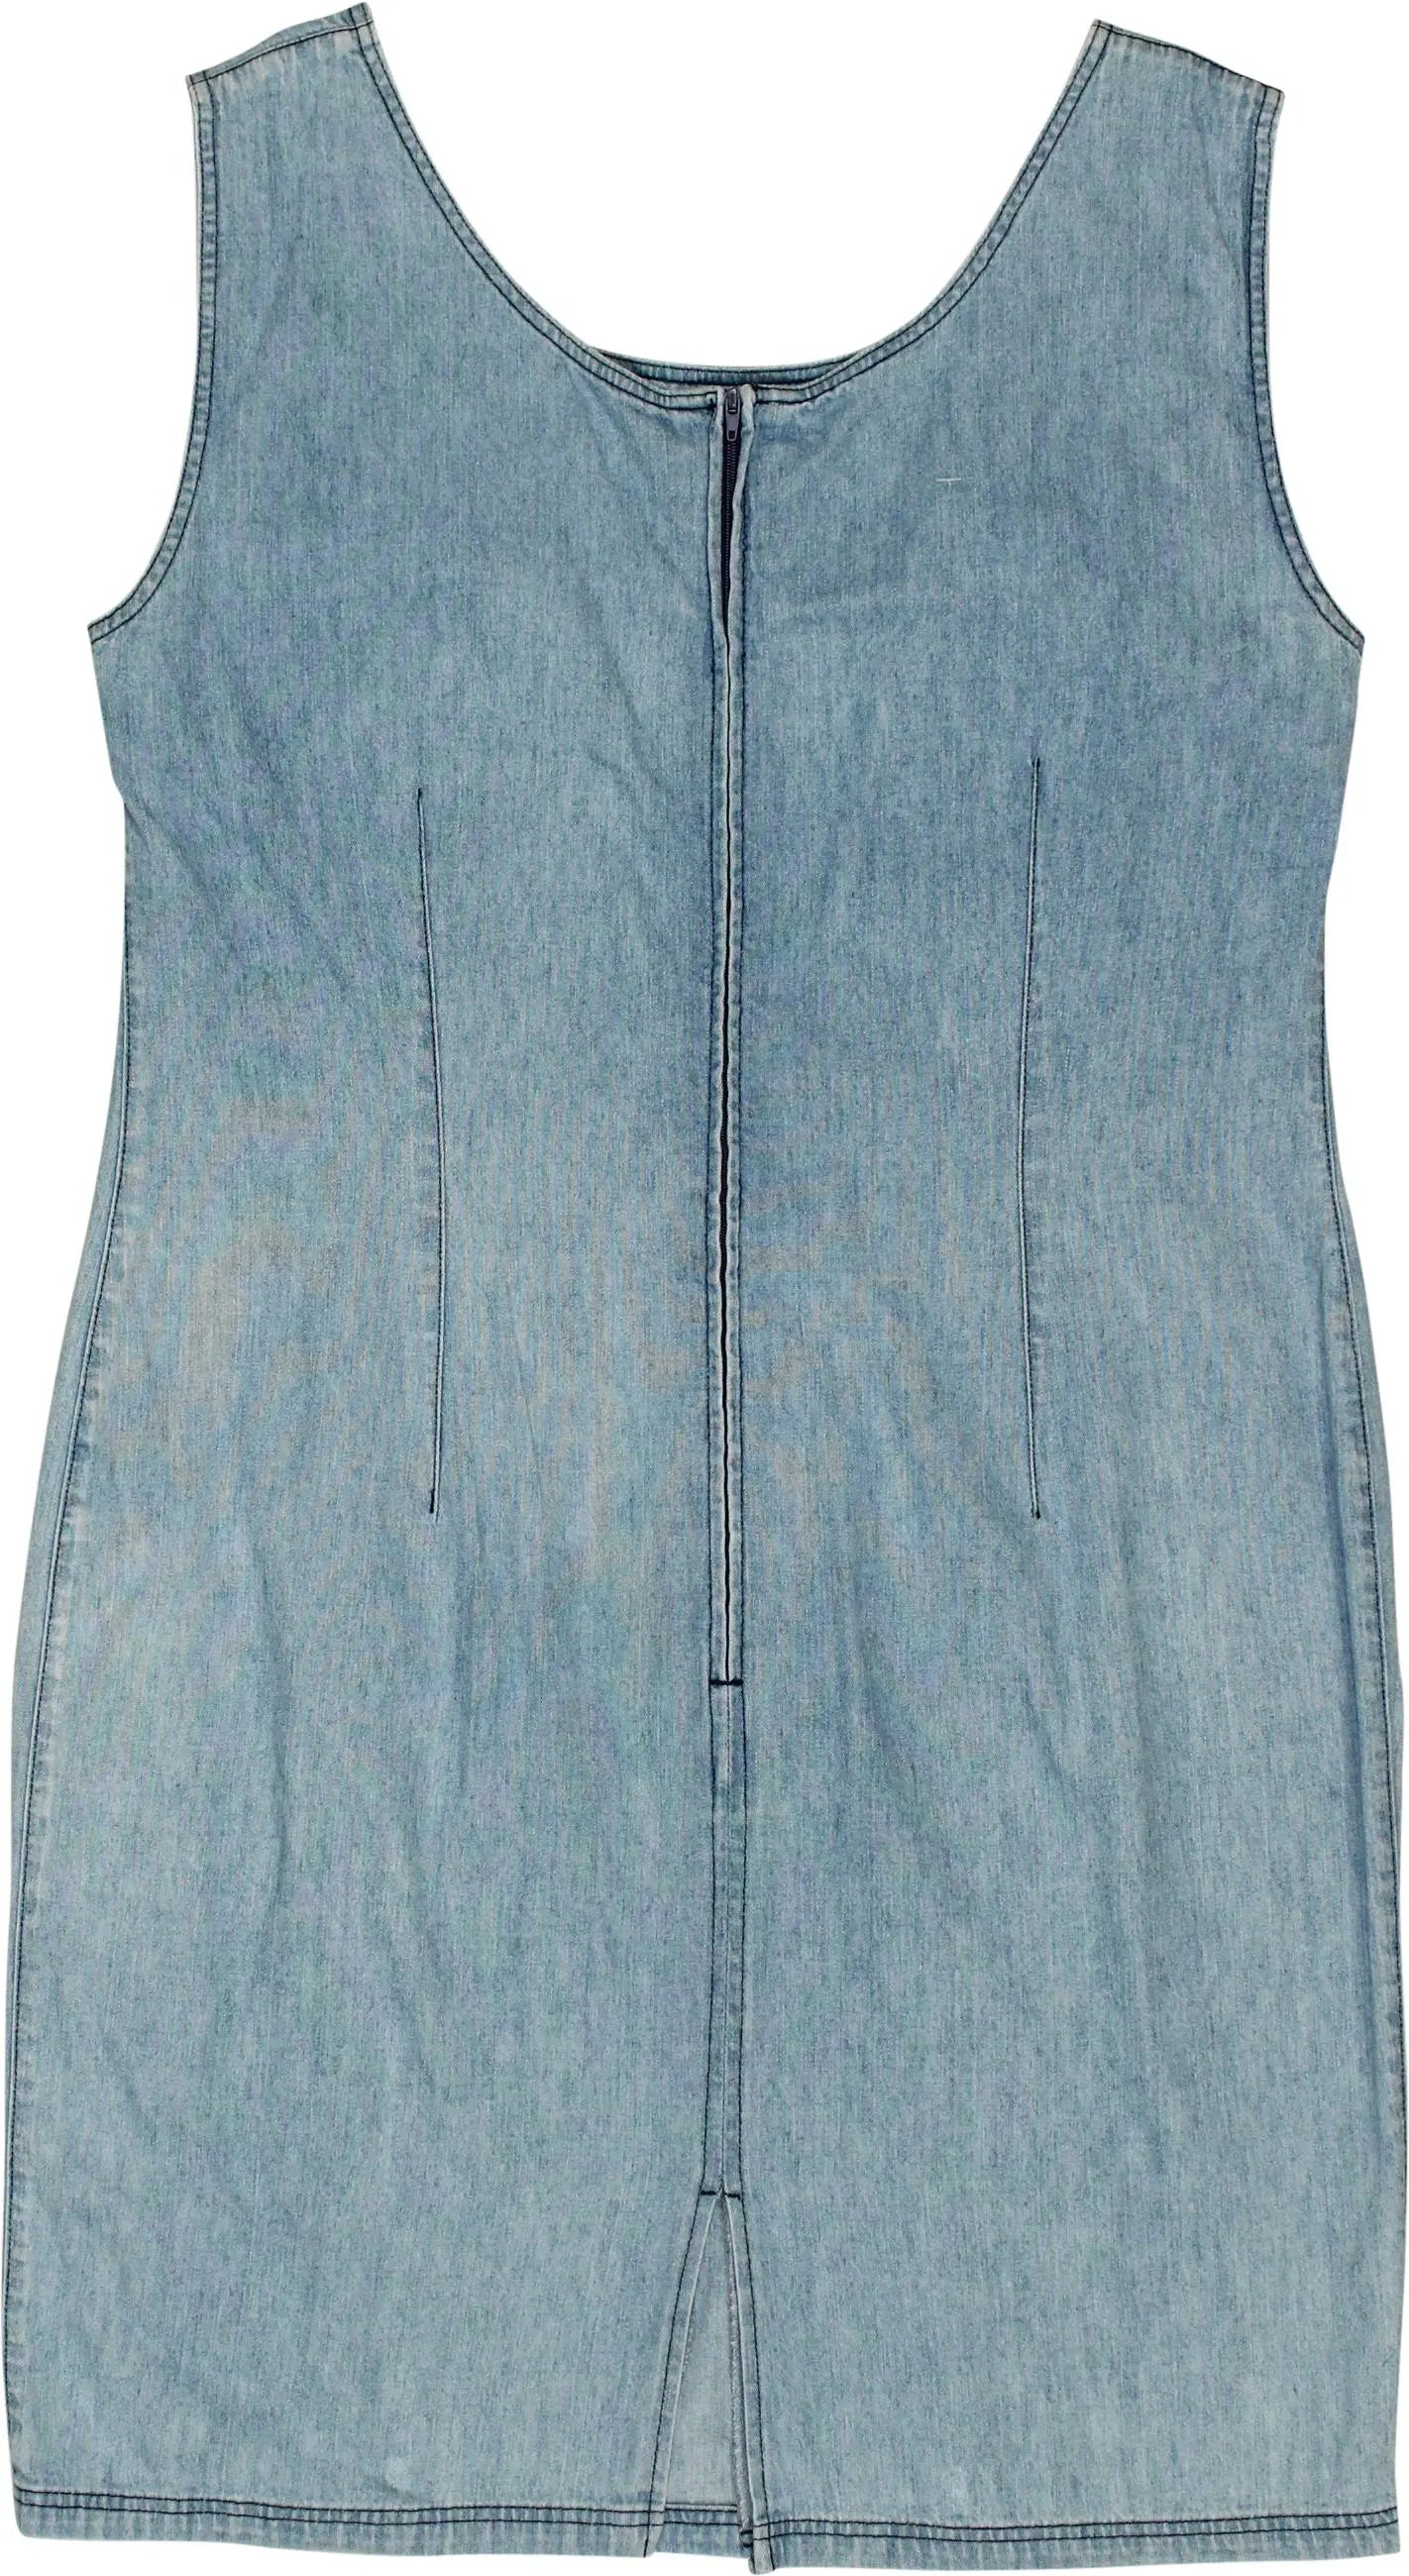 Steilmann - 90s Denim Dress- ThriftTale.com - Vintage and second handclothing